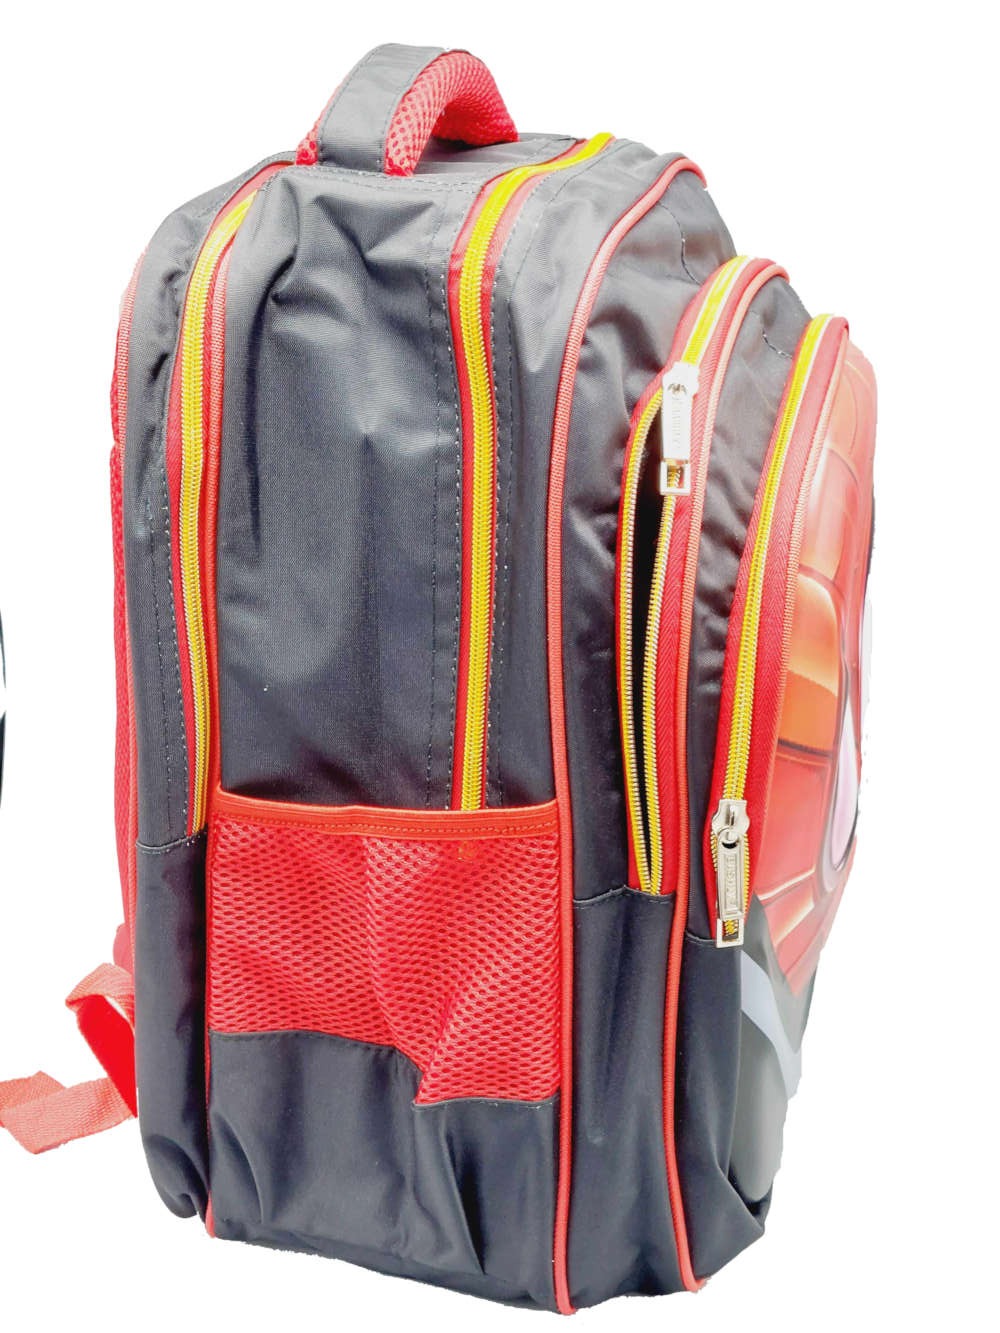 Spiderman Themed School Backpack For Kids Superhero School Bag